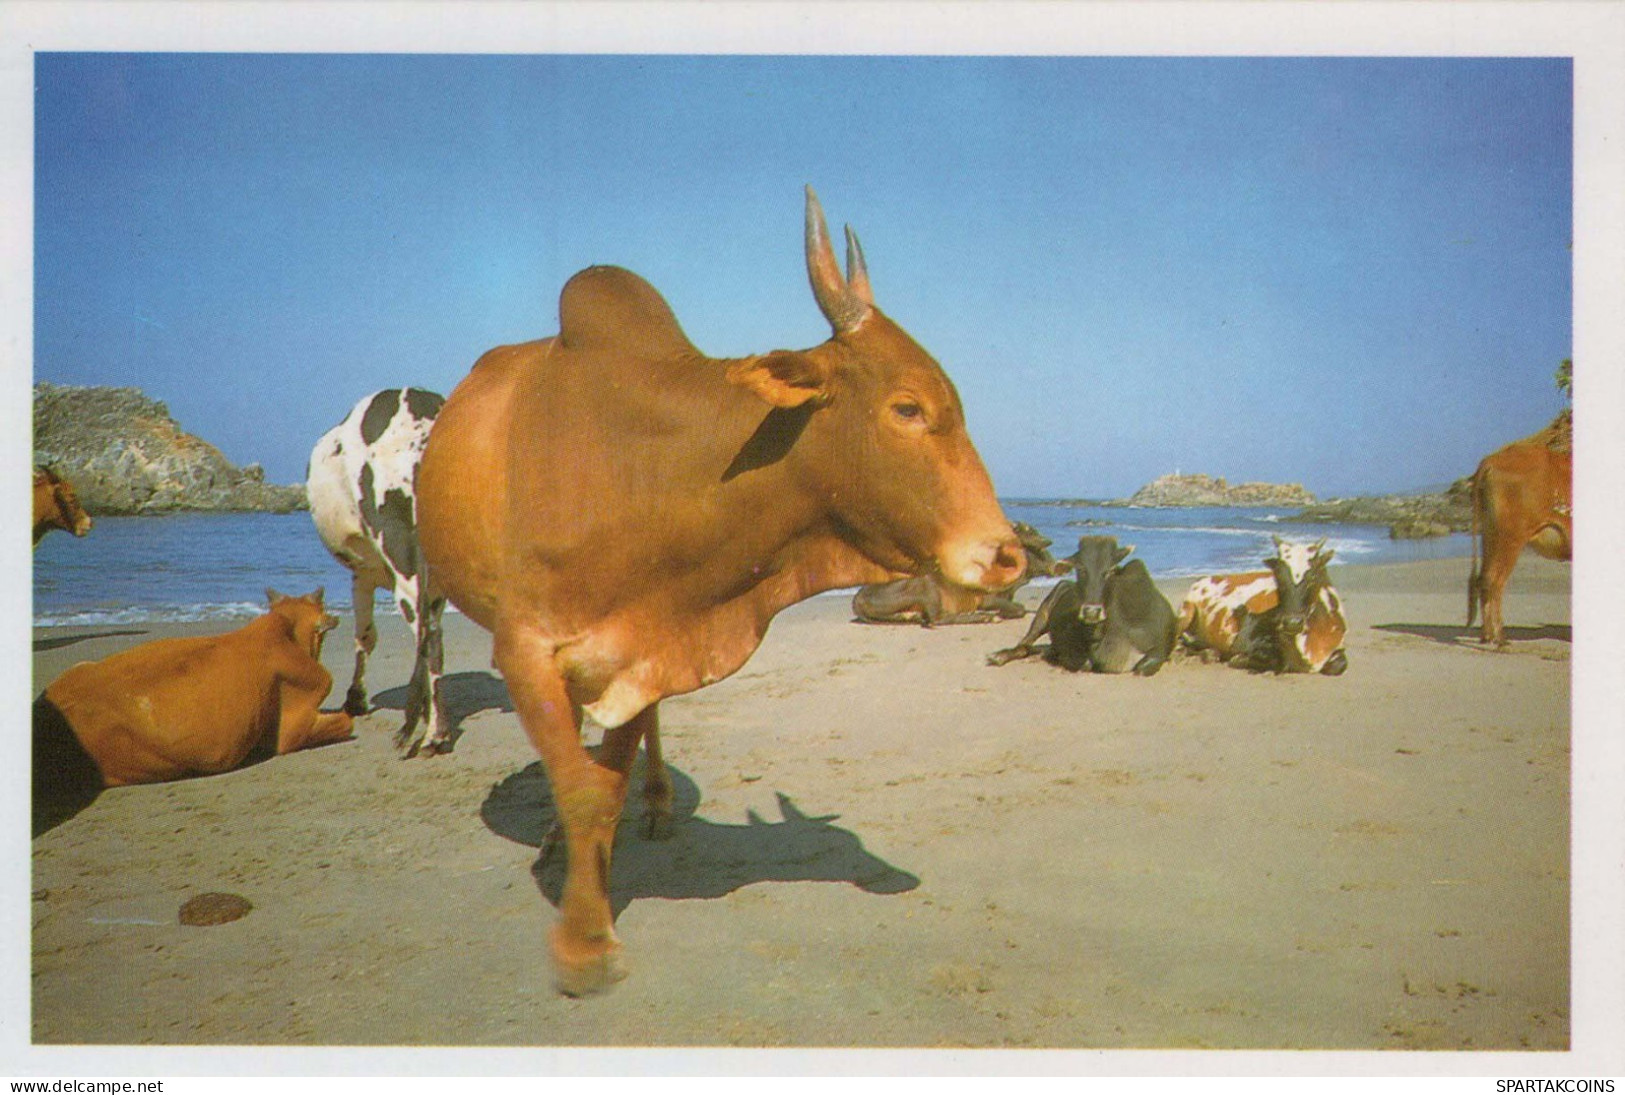 KUH Tier Vintage Ansichtskarte Postkarte CPSM #PBR793.A - Koeien